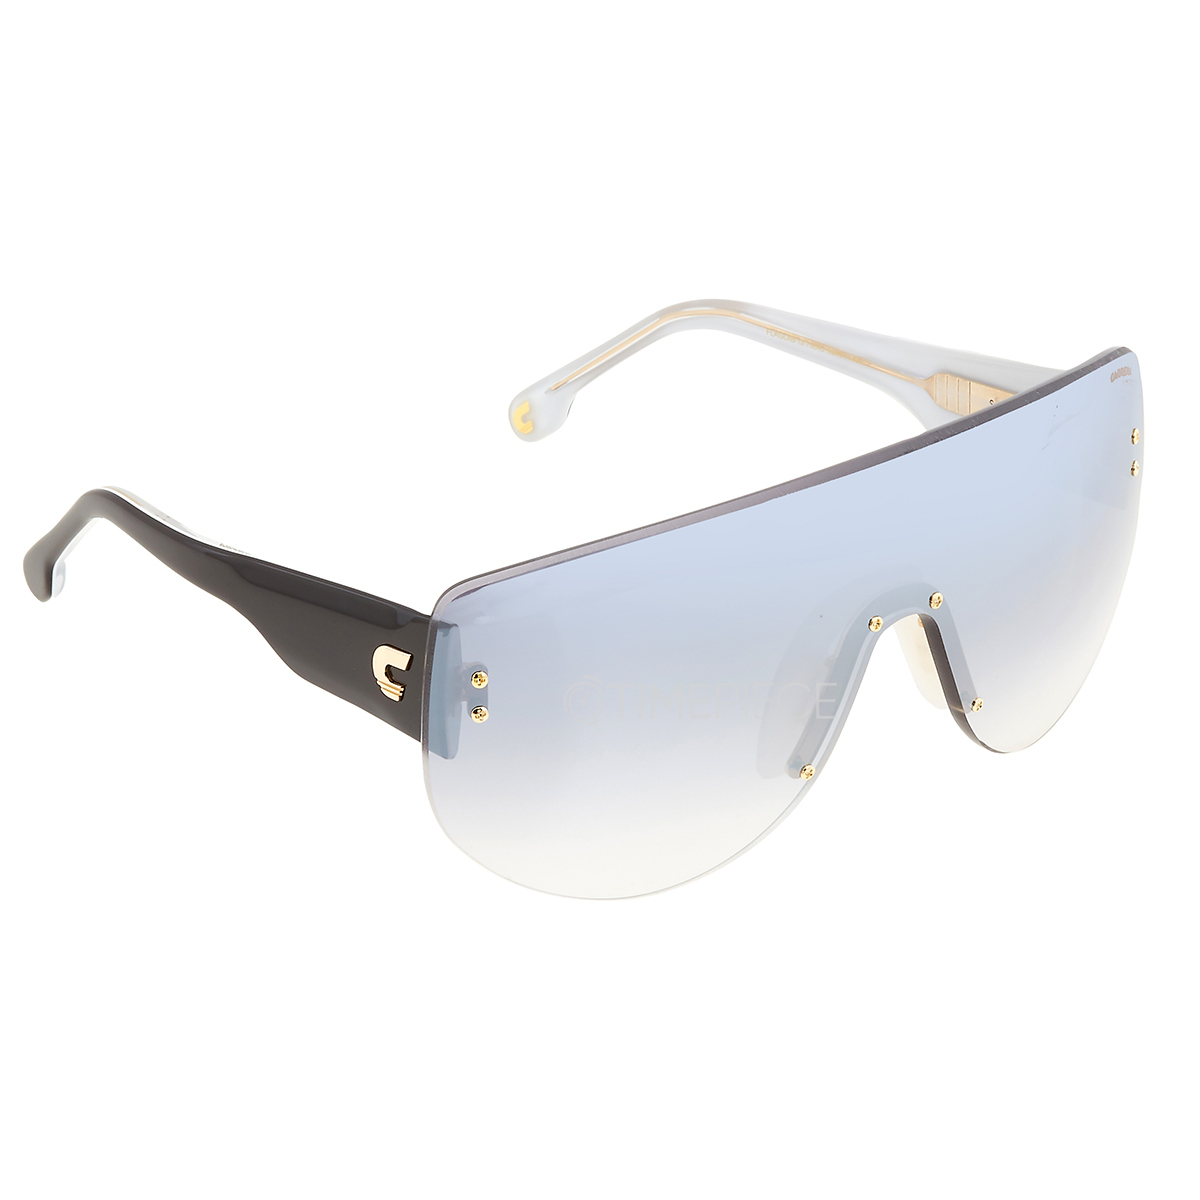 Carrera Flaglab 12 Sunglasses